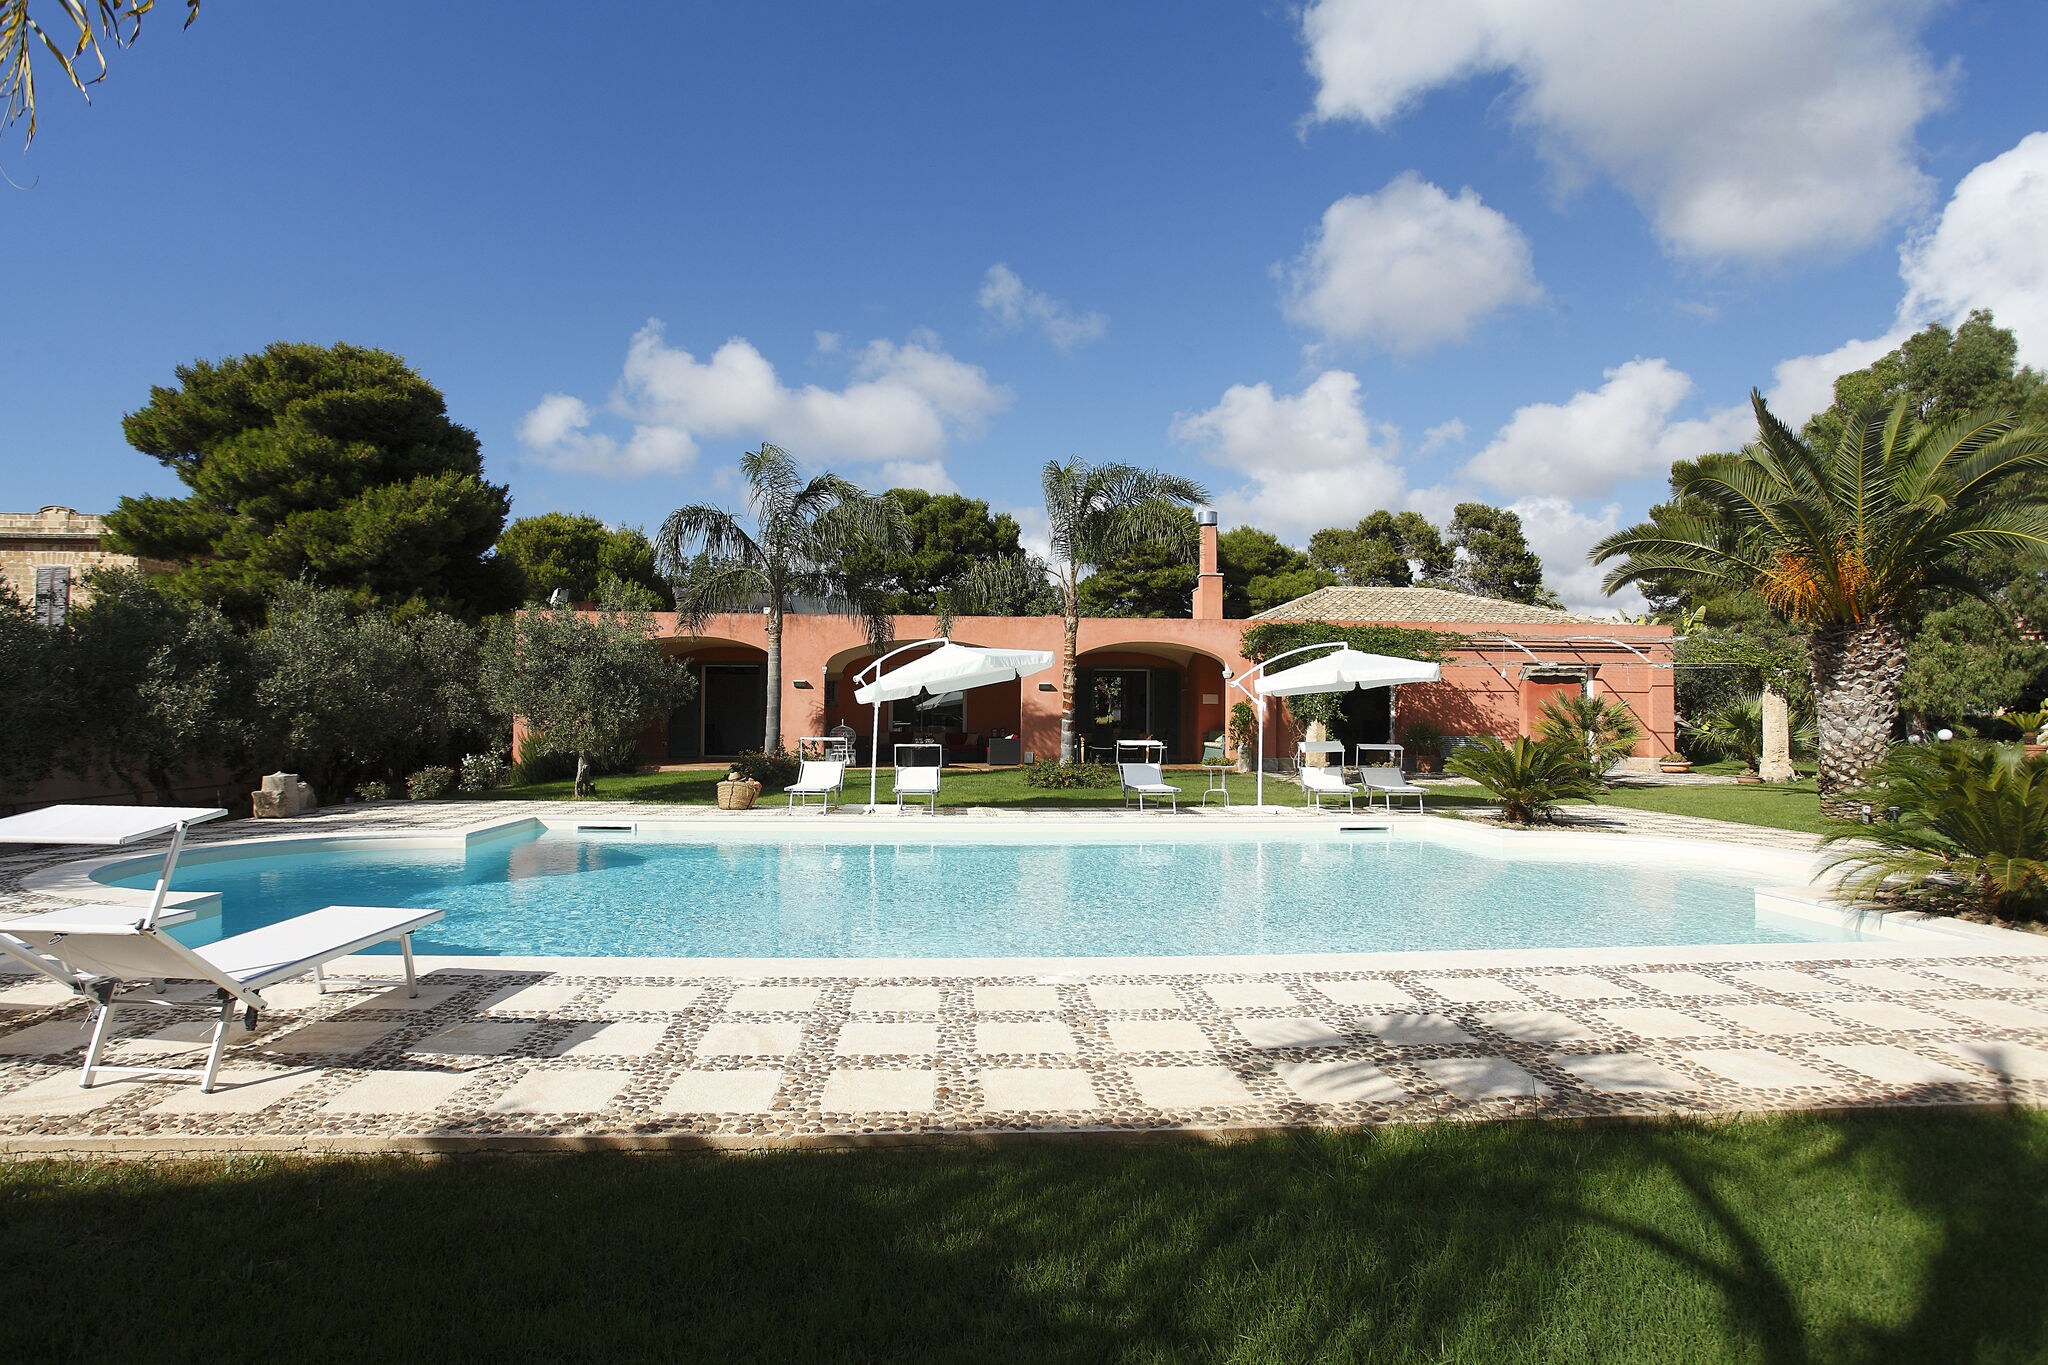 Historische villa in Sicilië met prachtige patio